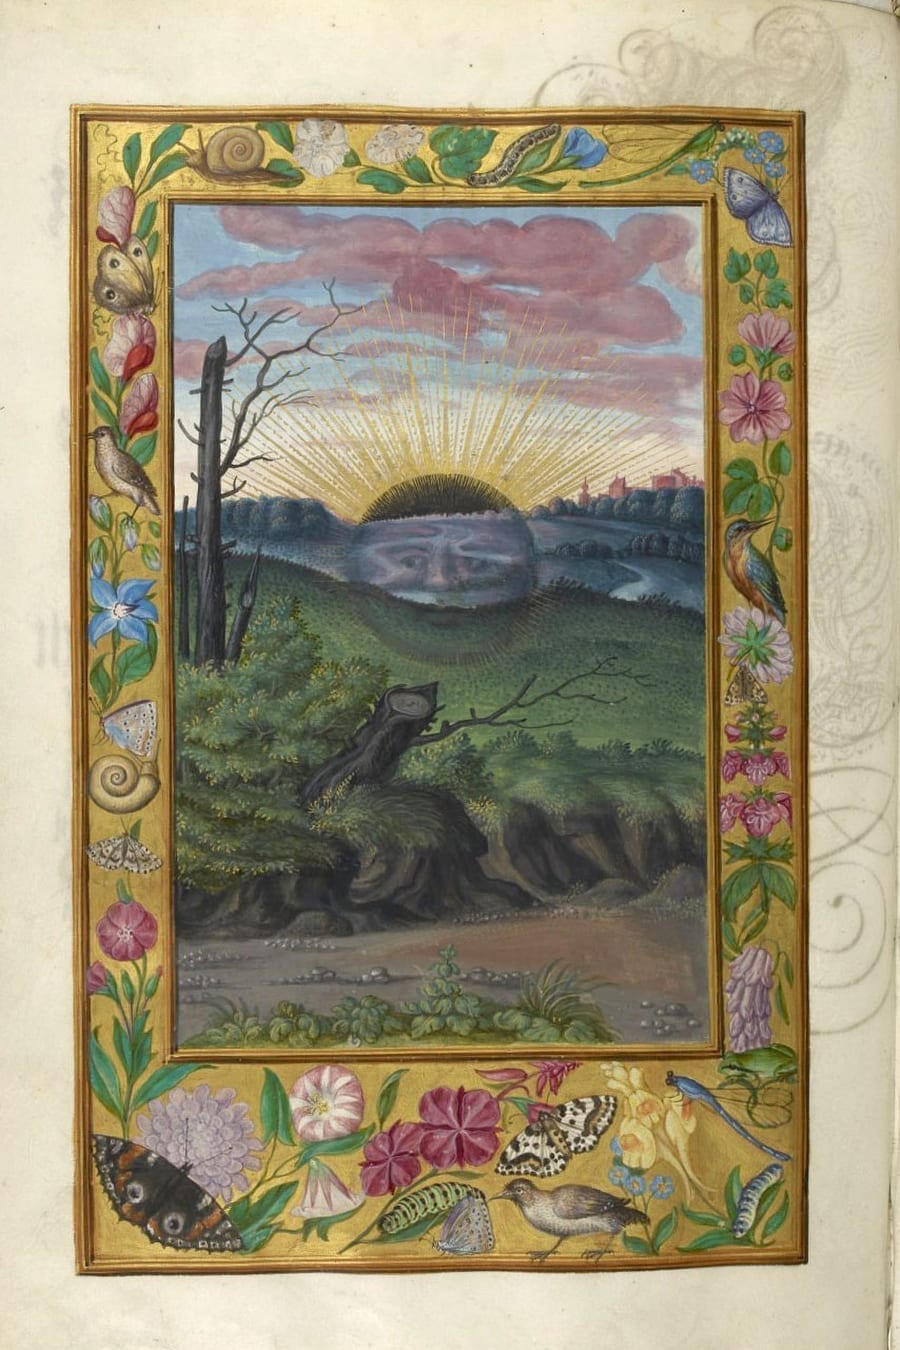 Illustration of a black sun from the Alchemical manuscript Splendor Solis